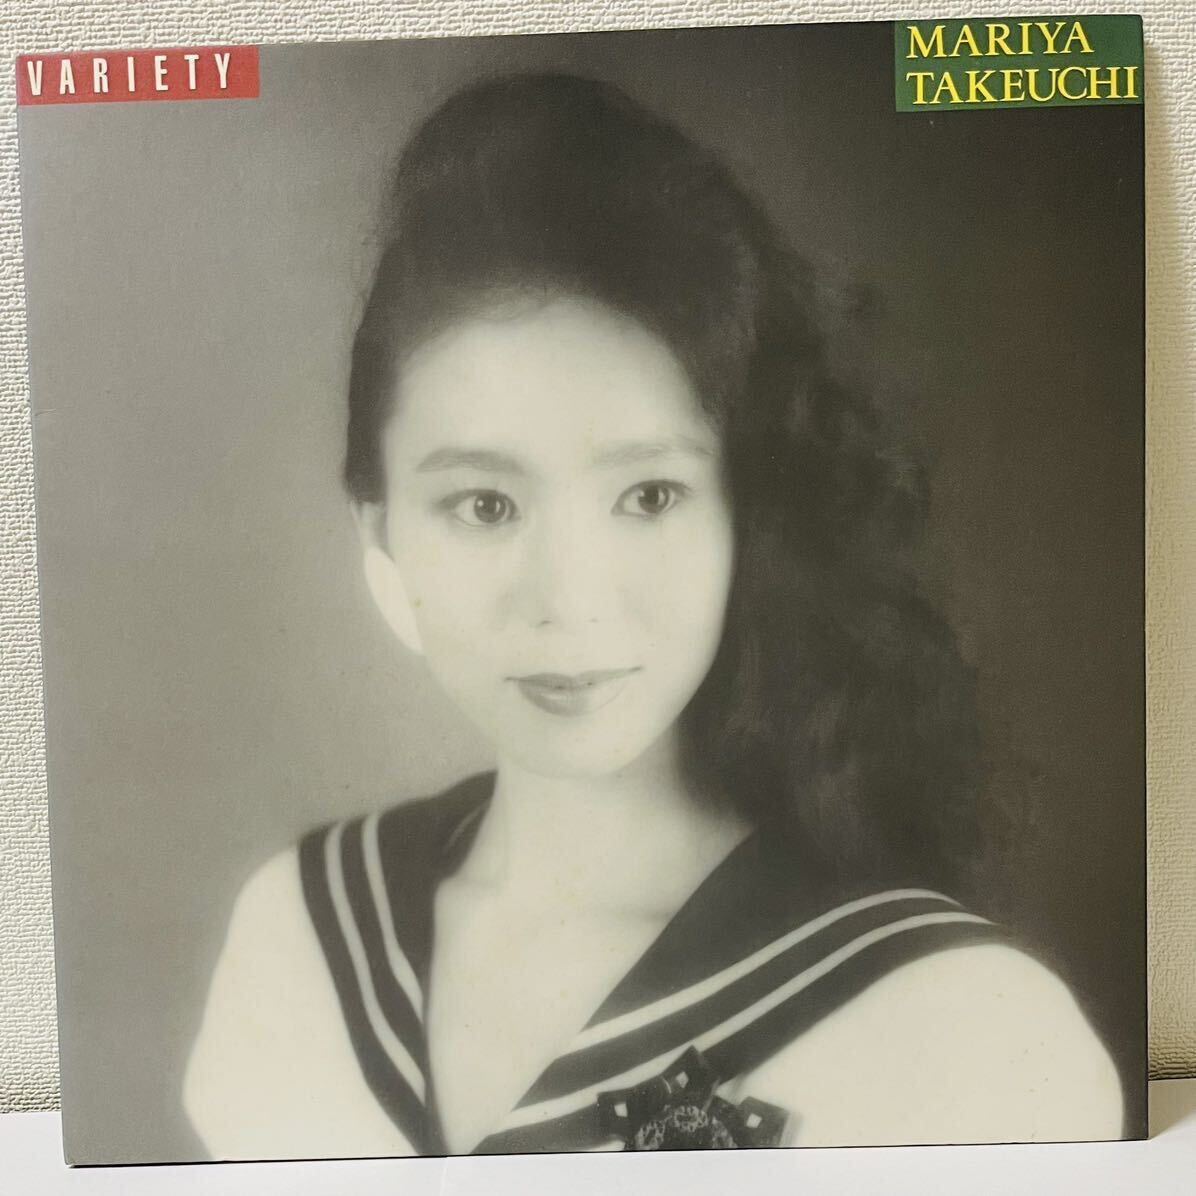 [ popular record ] Takeuchi Mariya [Variety(valaeti)]LP/Moon Records(MOON-28018)/ pops beautiful goods Yamashita Tatsuro record JAPANESE CITY POP